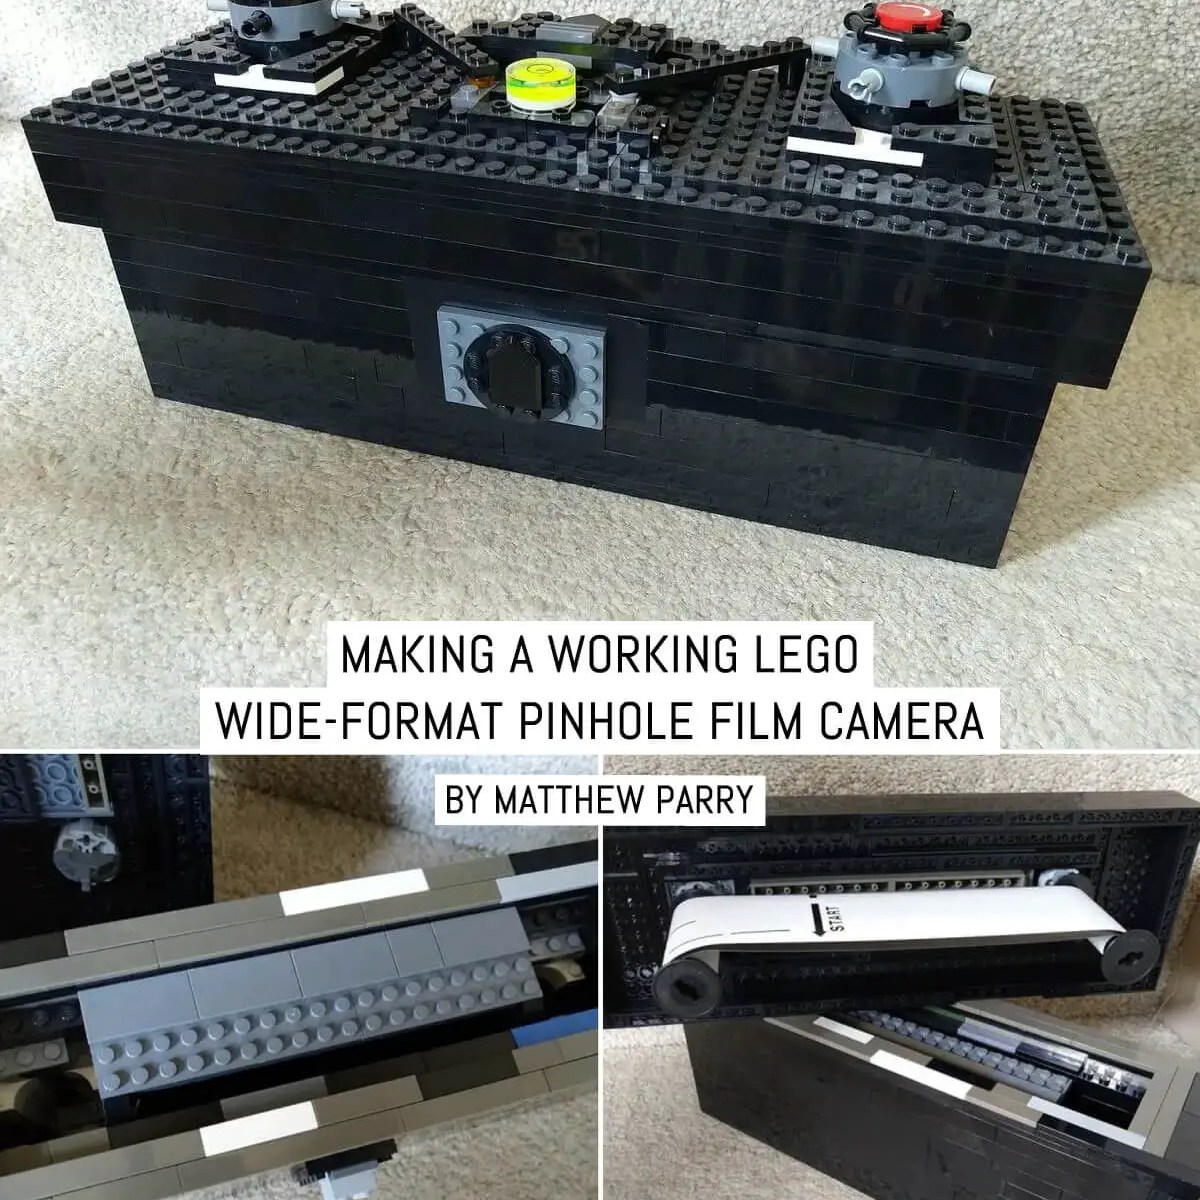 Making a working LEGO wide-format pinhole film camera